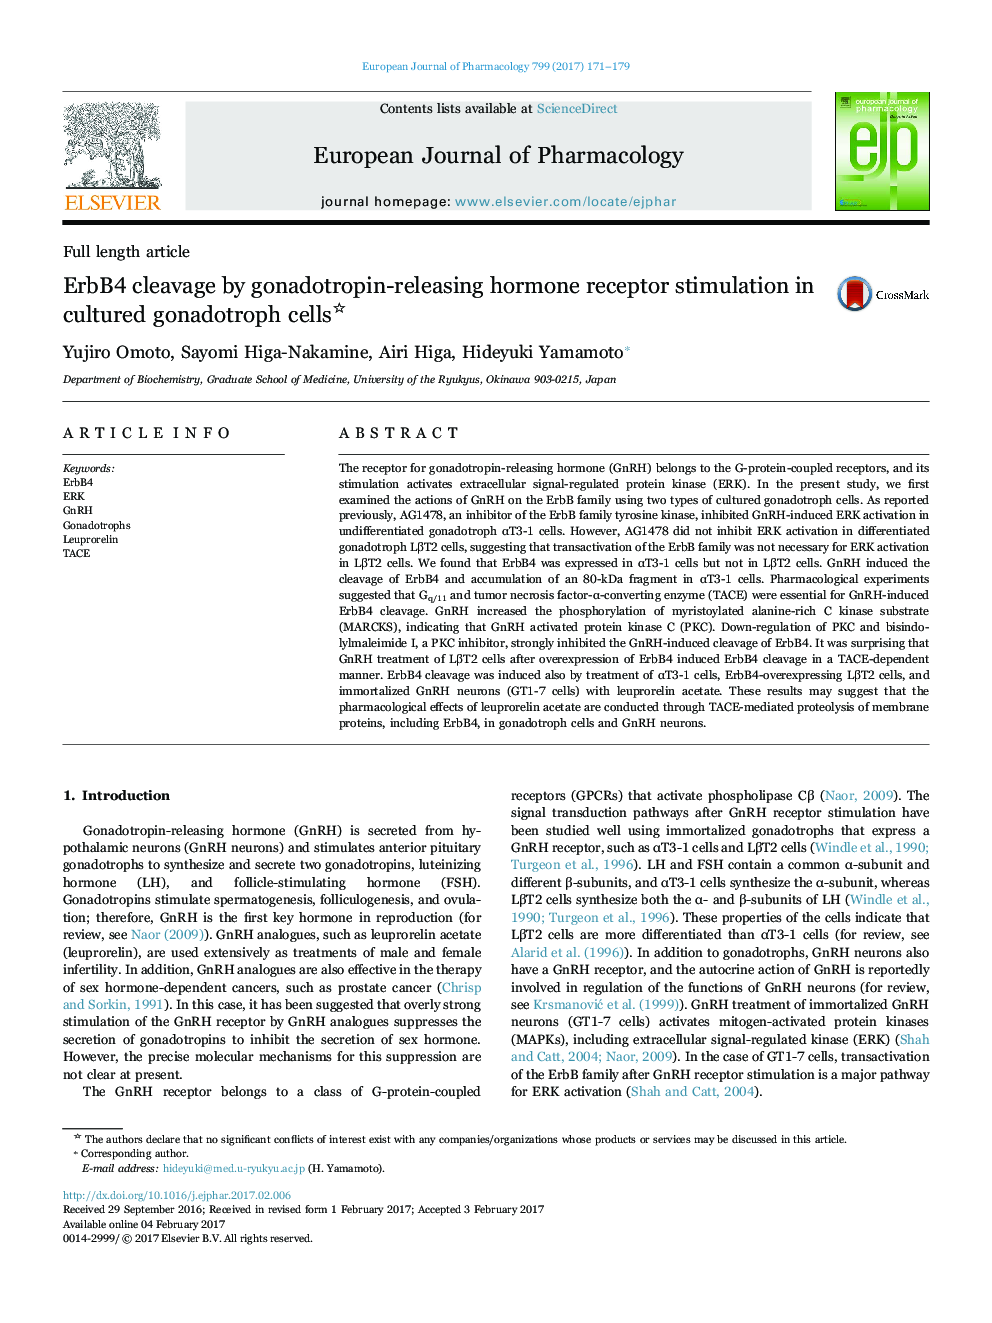 ErbB4 cleavage by gonadotropin-releasing hormone receptor stimulation in cultured gonadotroph cells